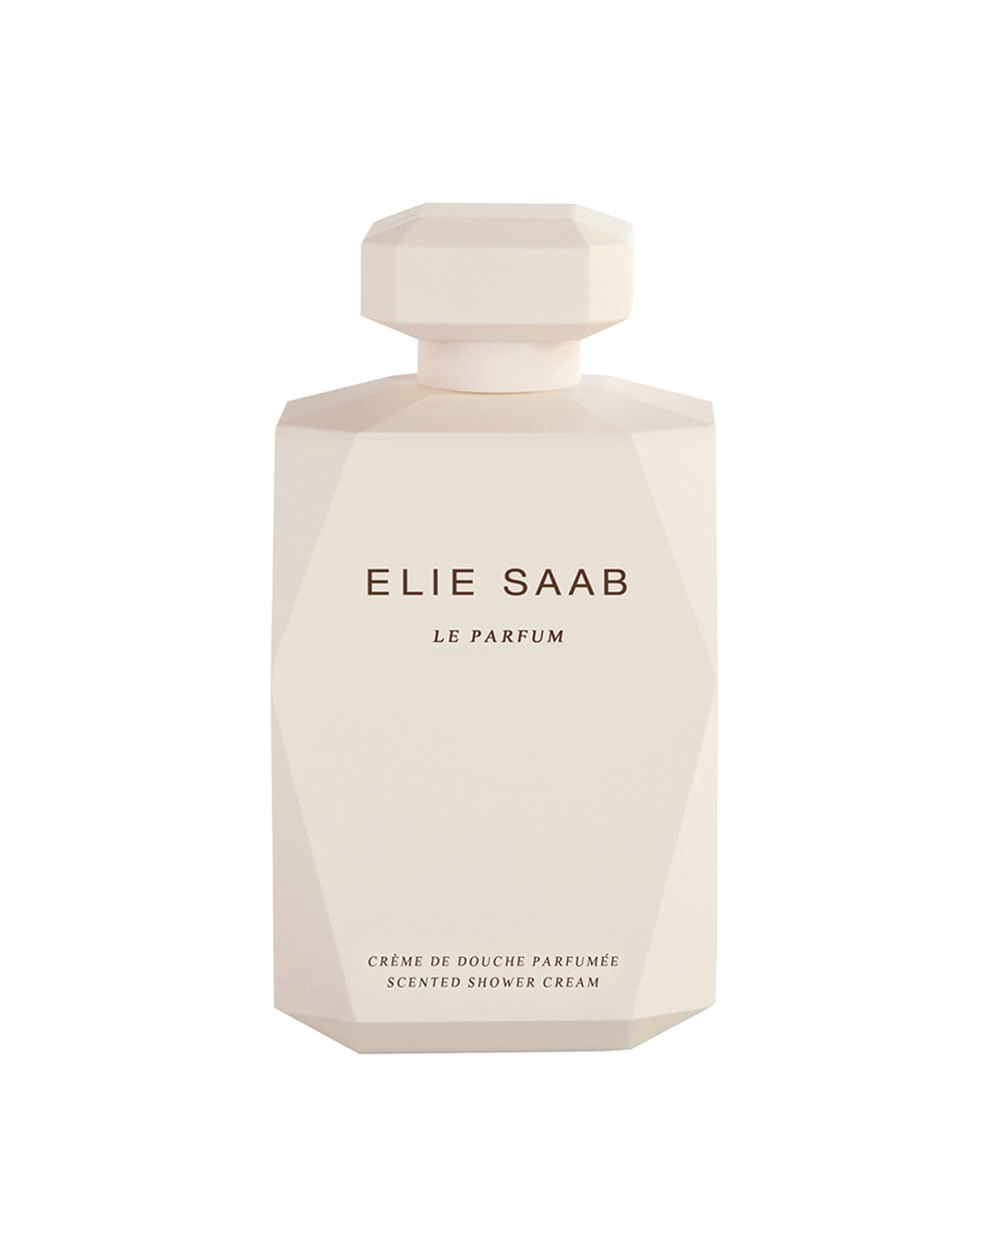 Ellie Saab, 'Le Parfum' Shower Cream, $98, from Smith & Caughey's